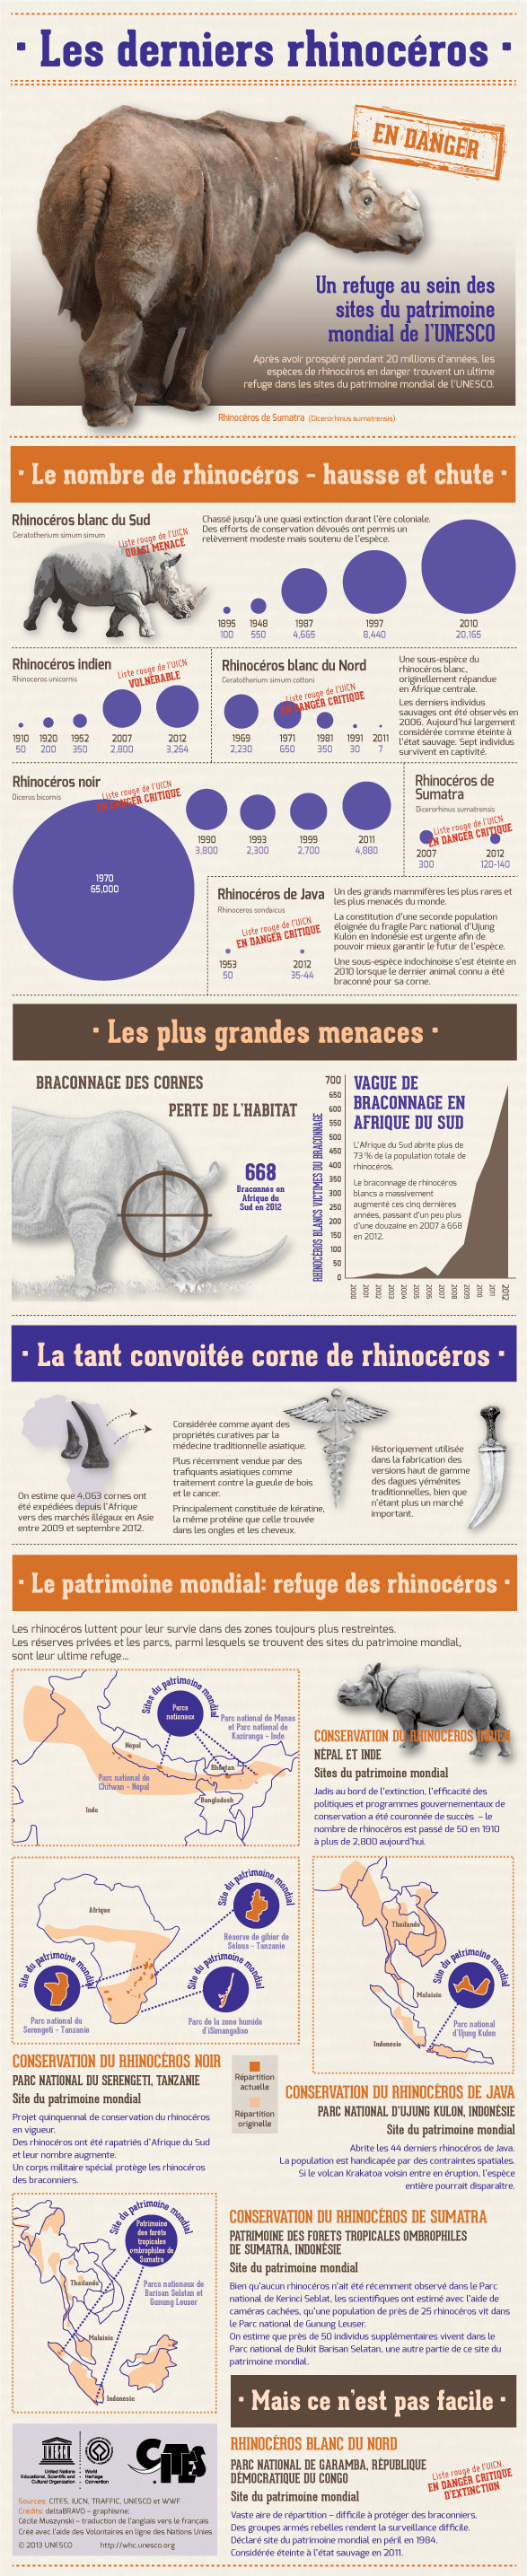 Les derniers rhinocéros Infographic